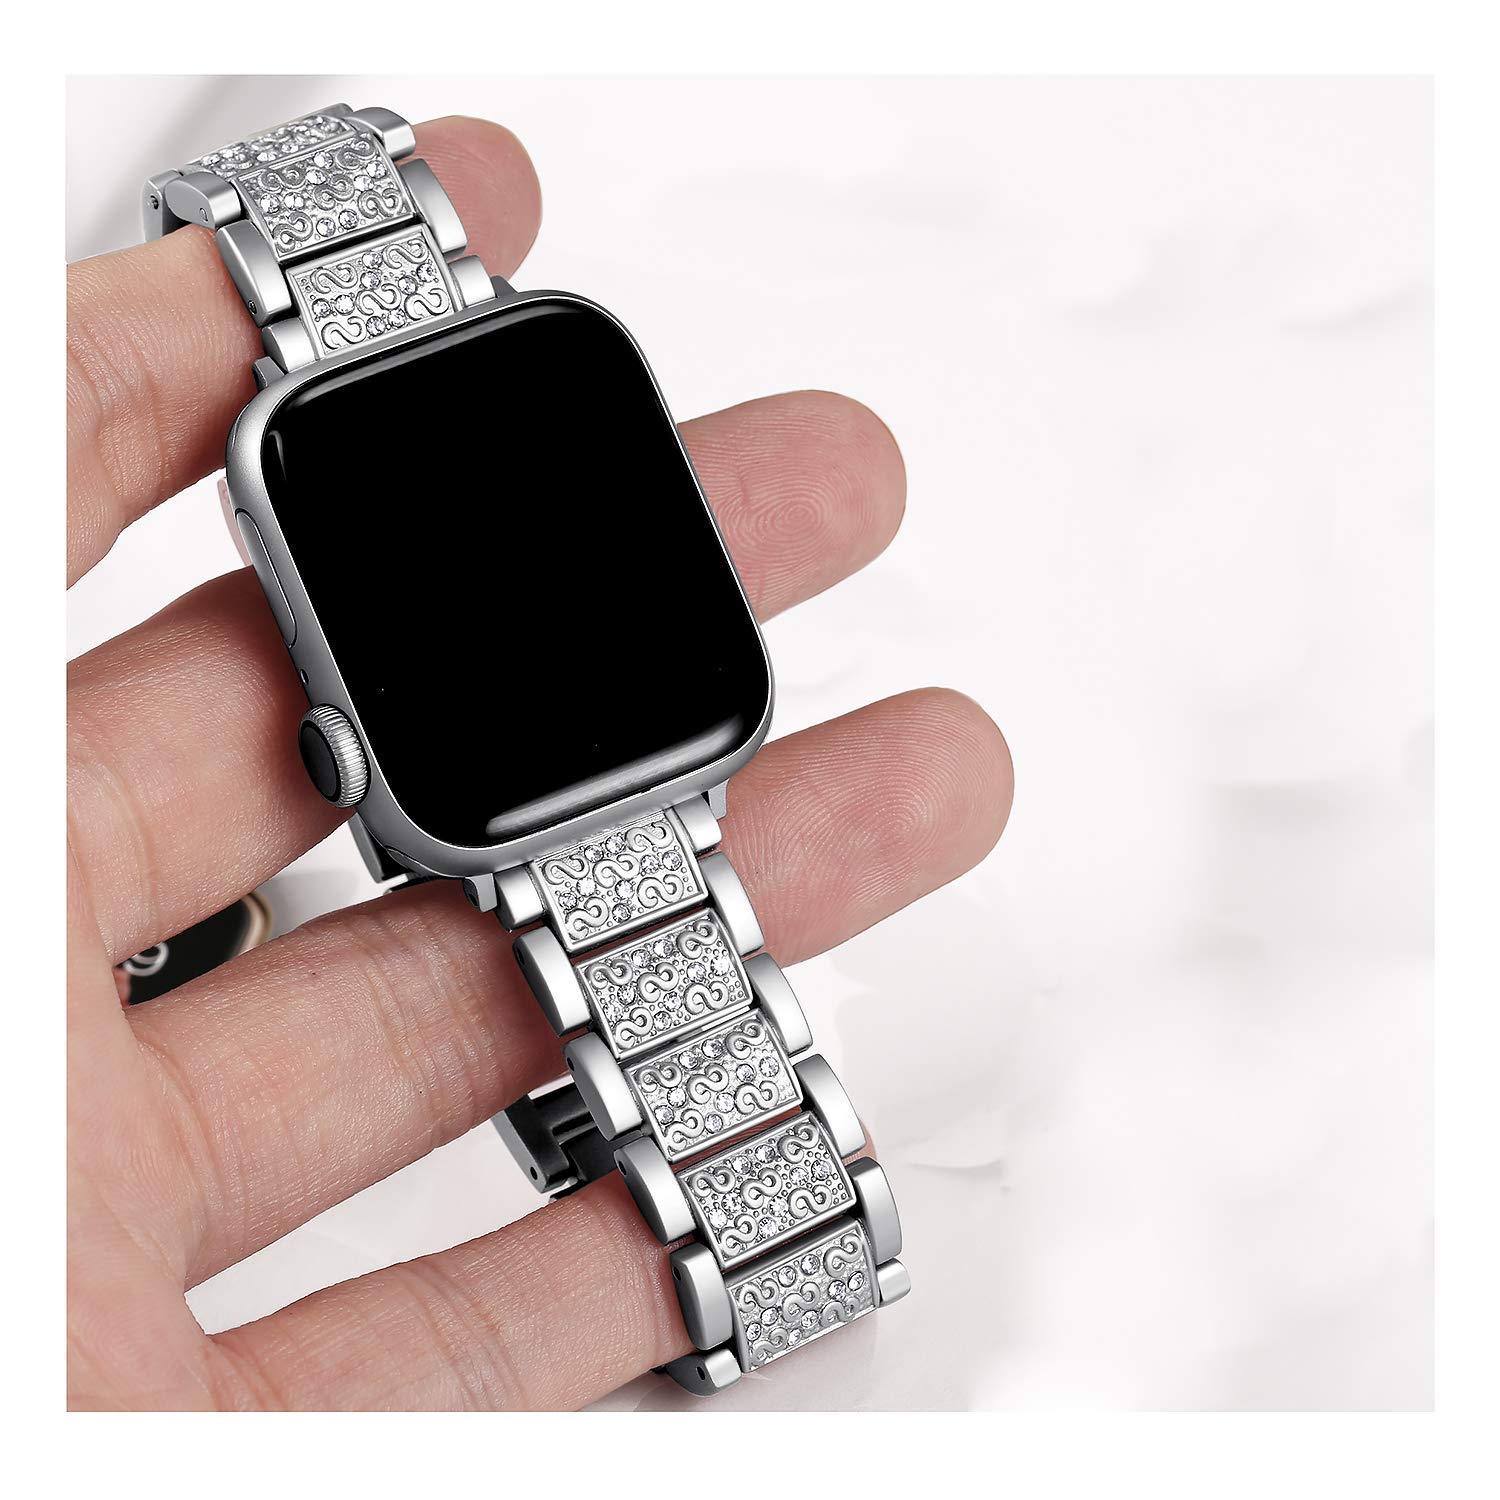 g-shock g100 big combi vivid color (limited edition) wrist watch in  black/blue - Walmart.com